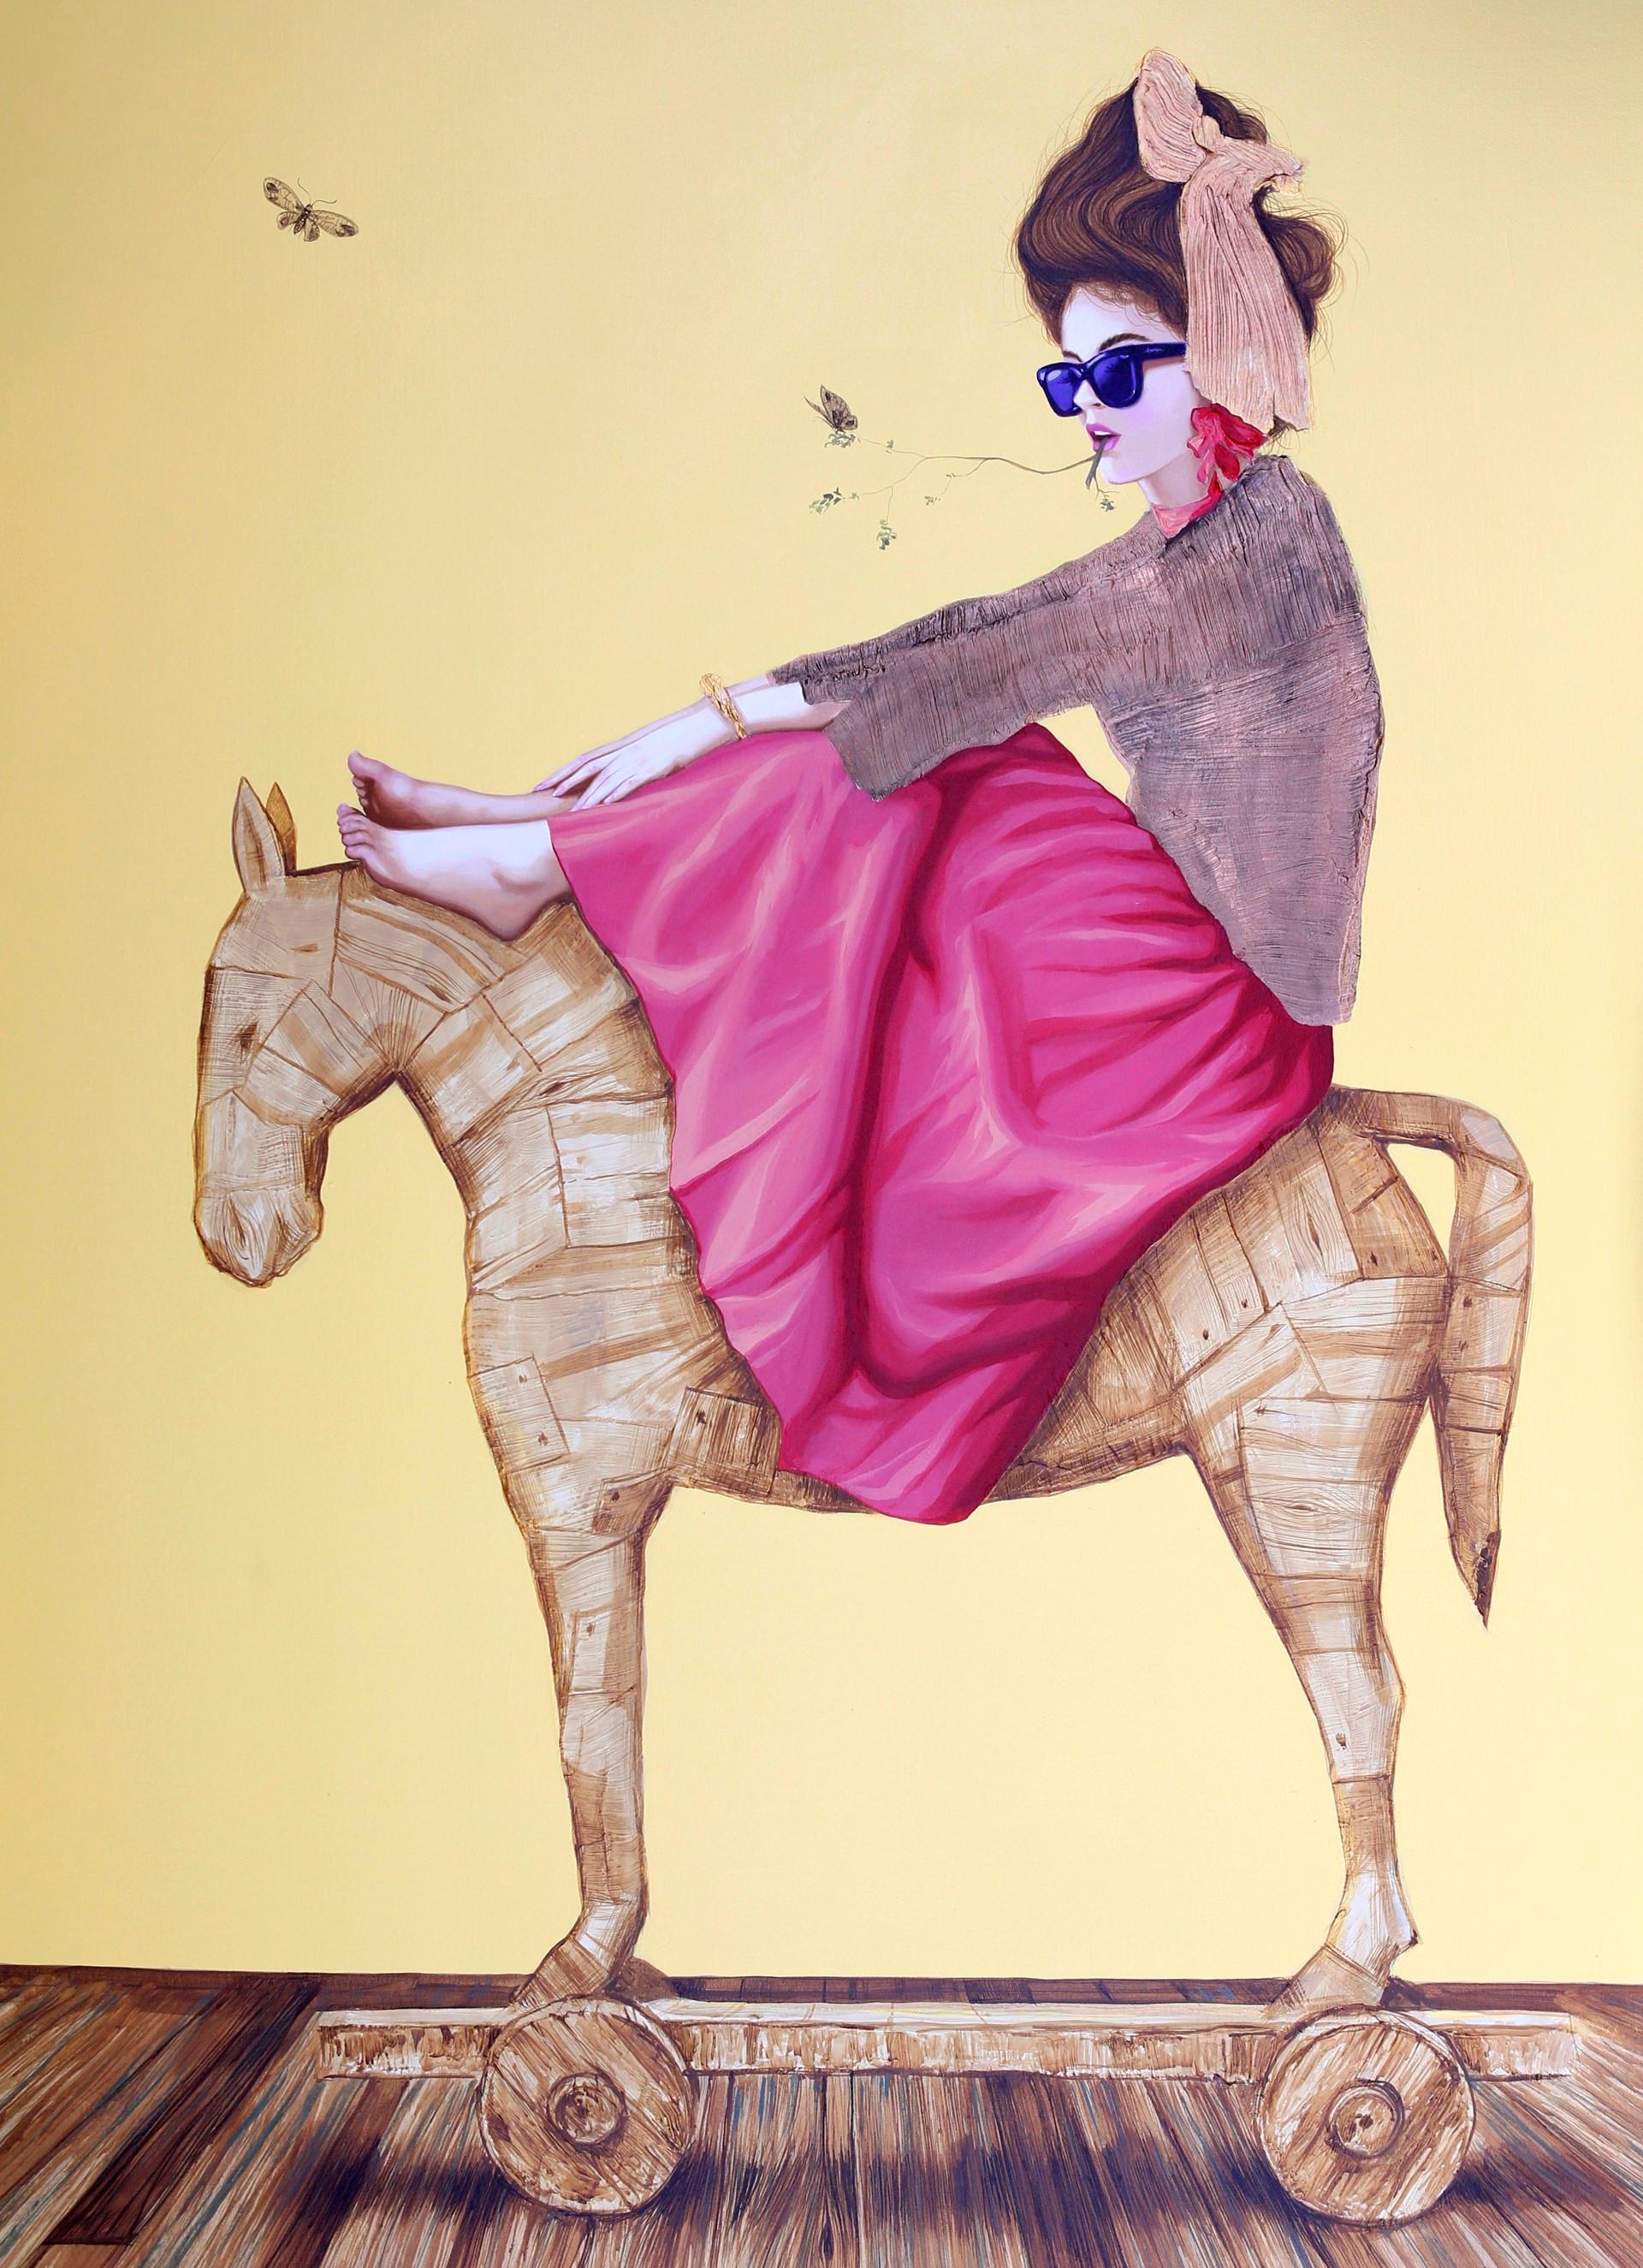 The Rider - Painting by Carlos Gamez De Francisco